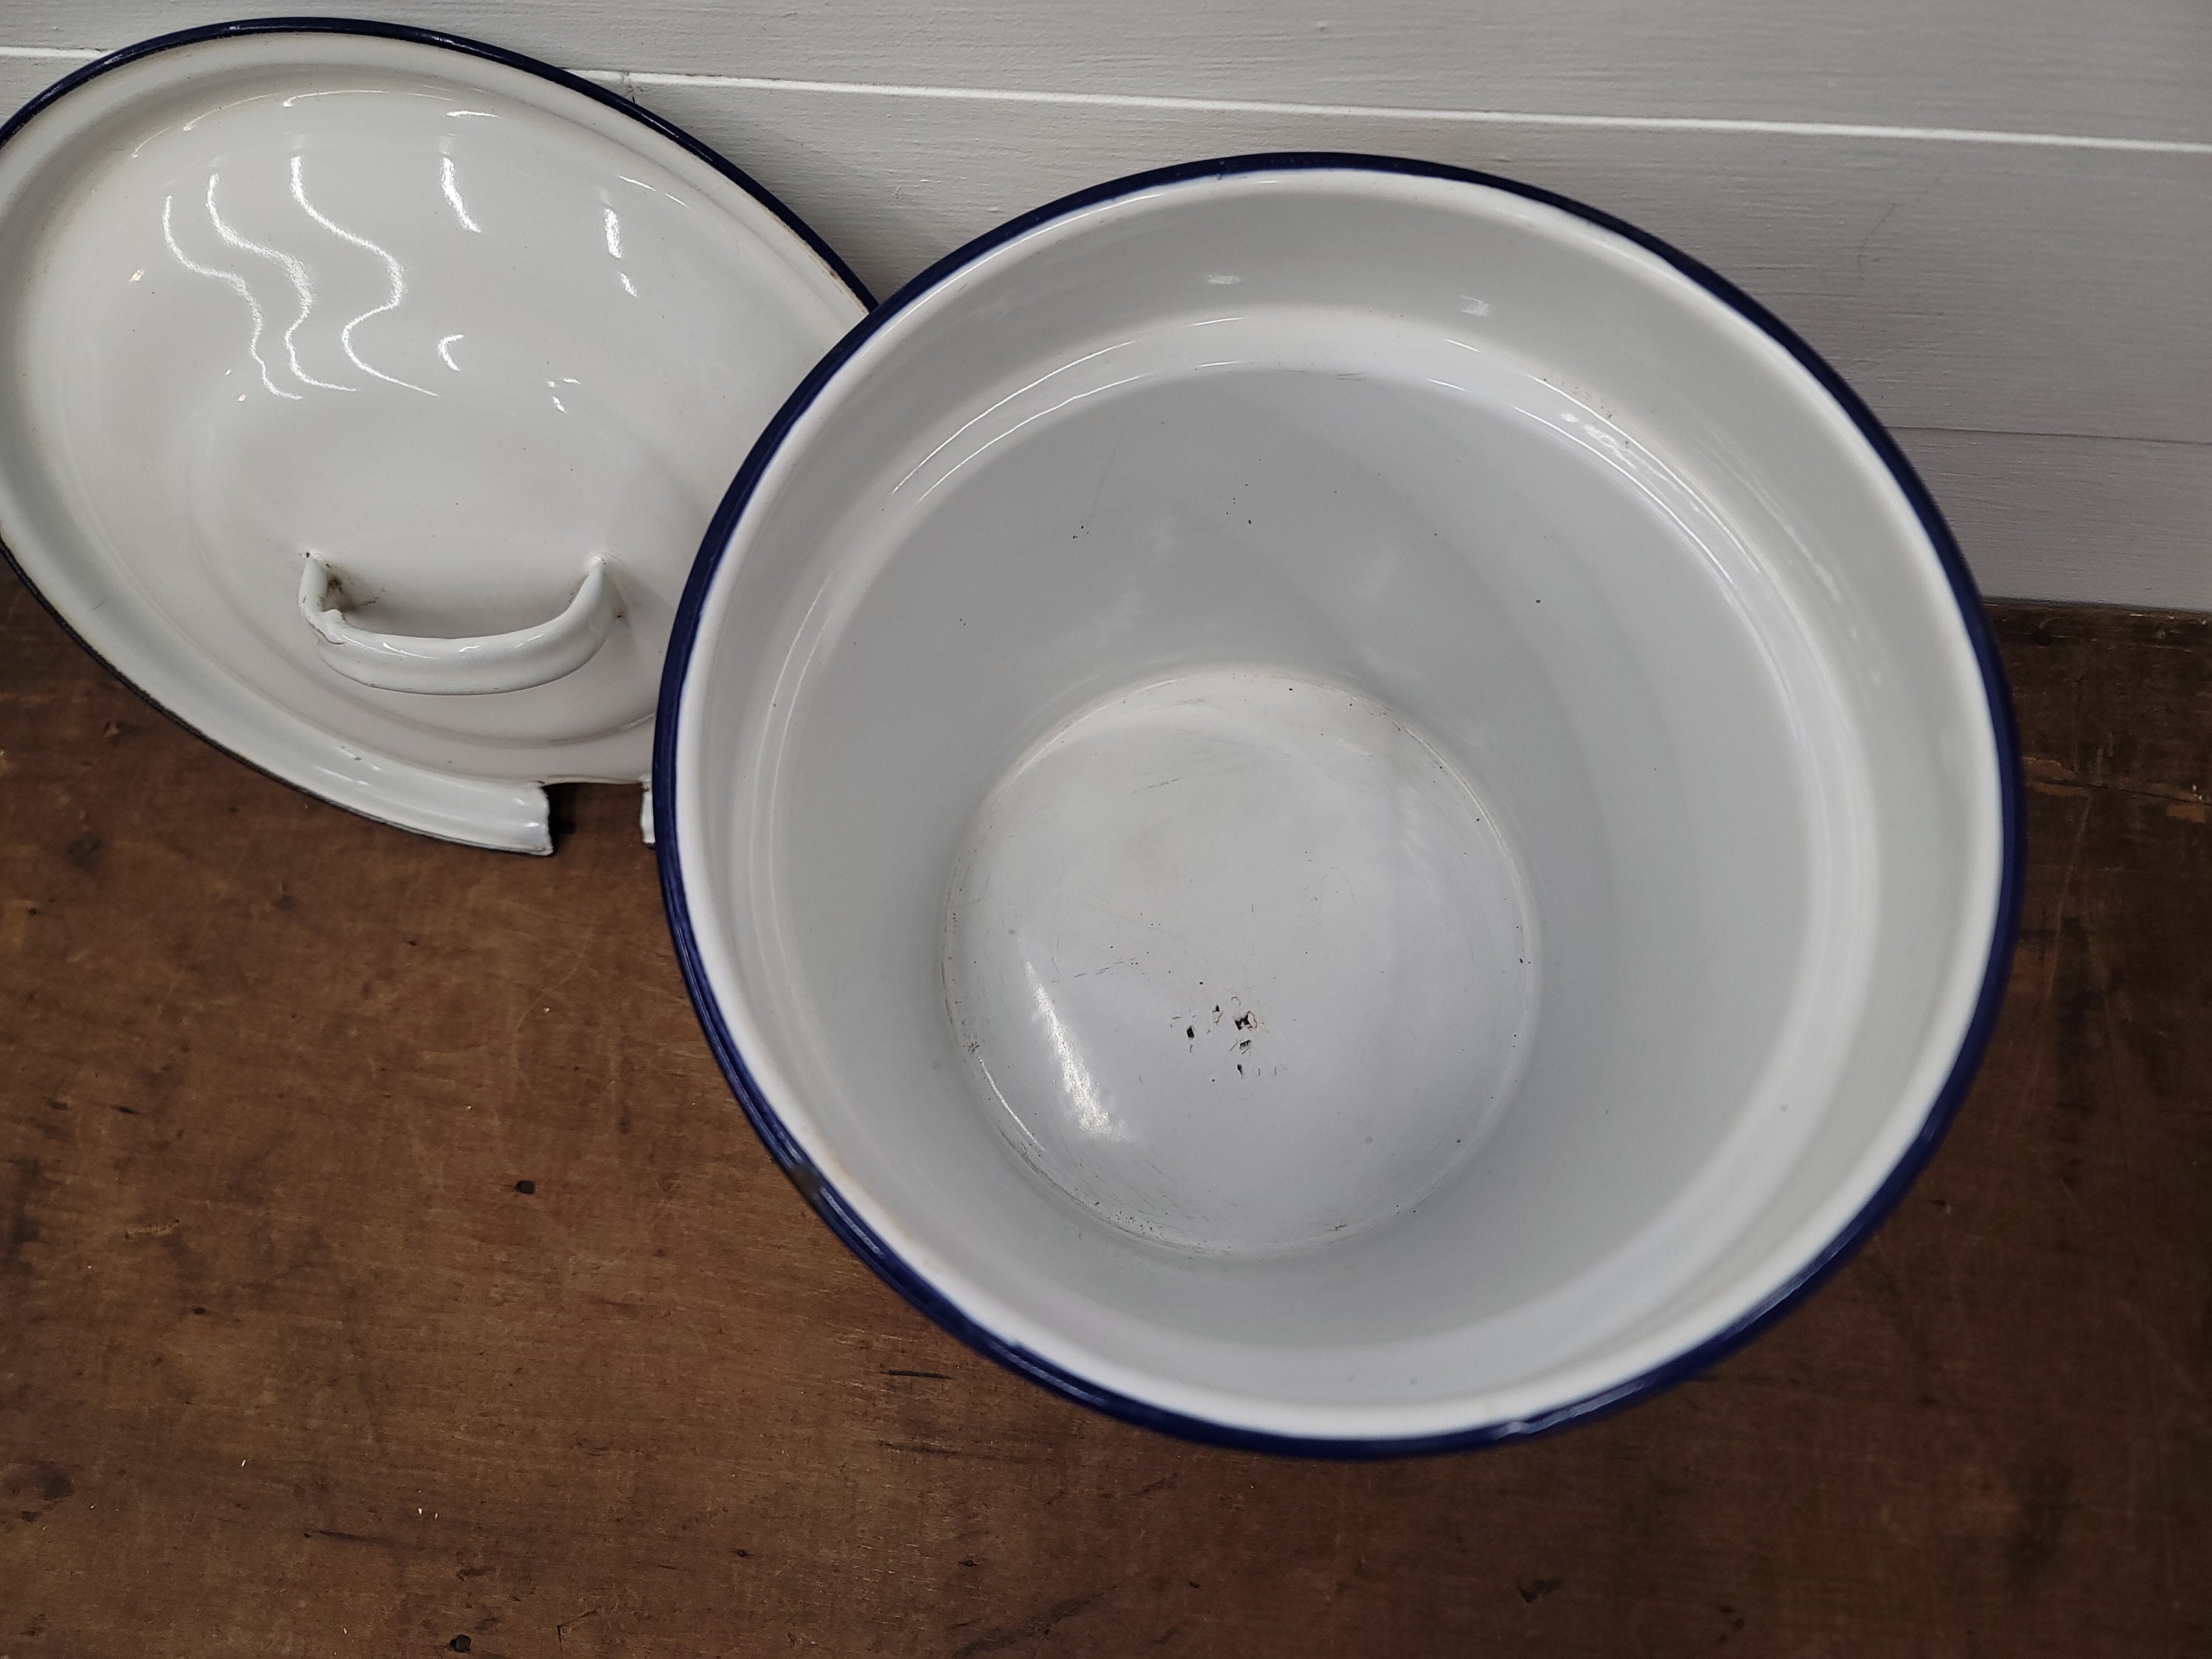 Vintage White Blue Trim Enamelware Stock Pot Insert With Lid